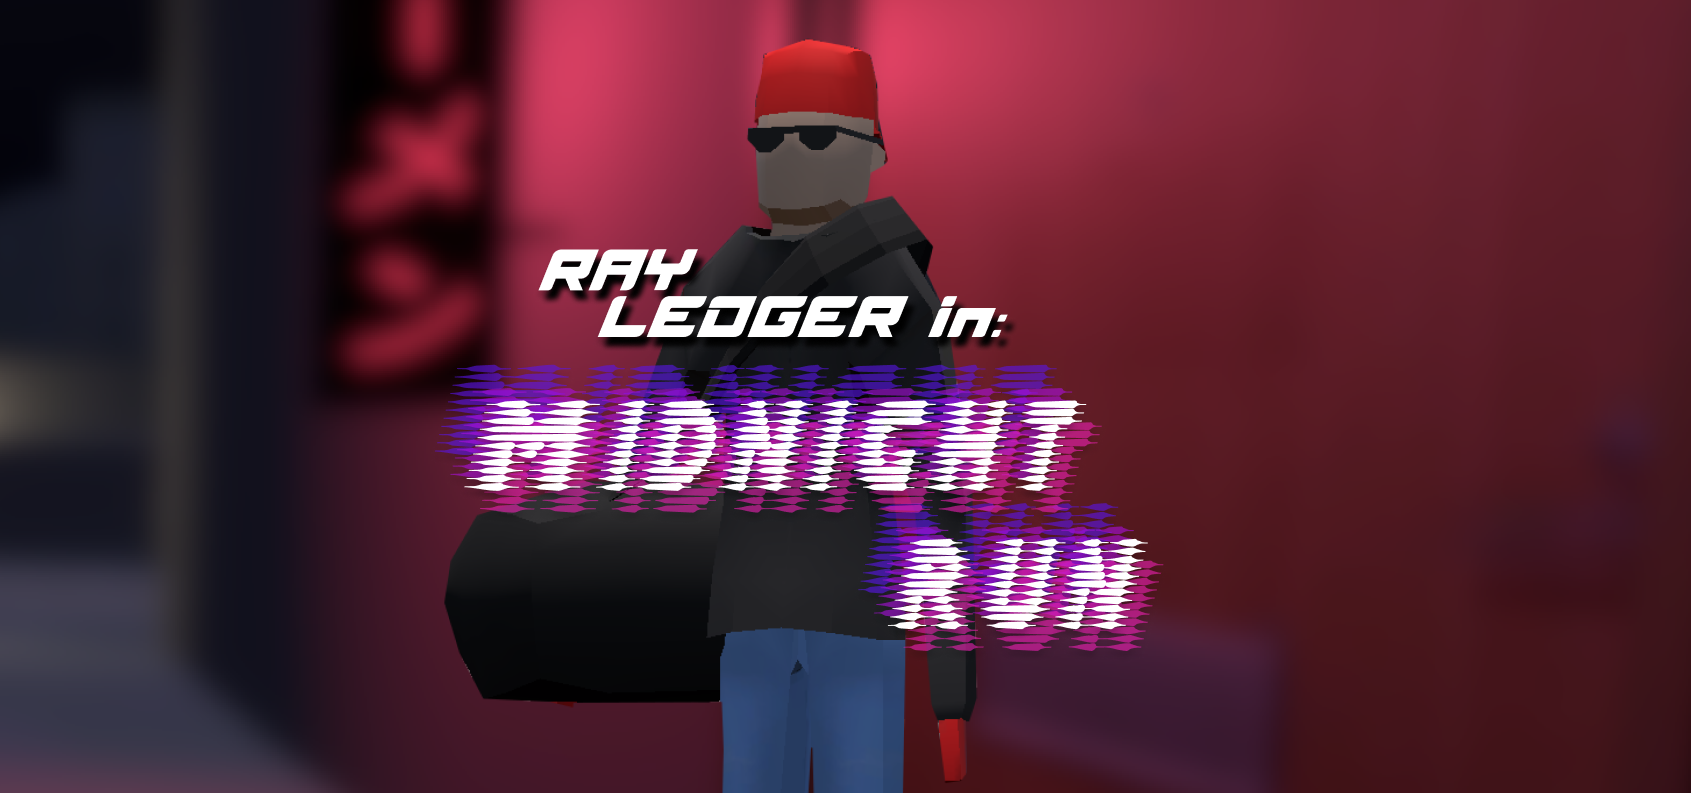 Ray Ledger: Midnight Run